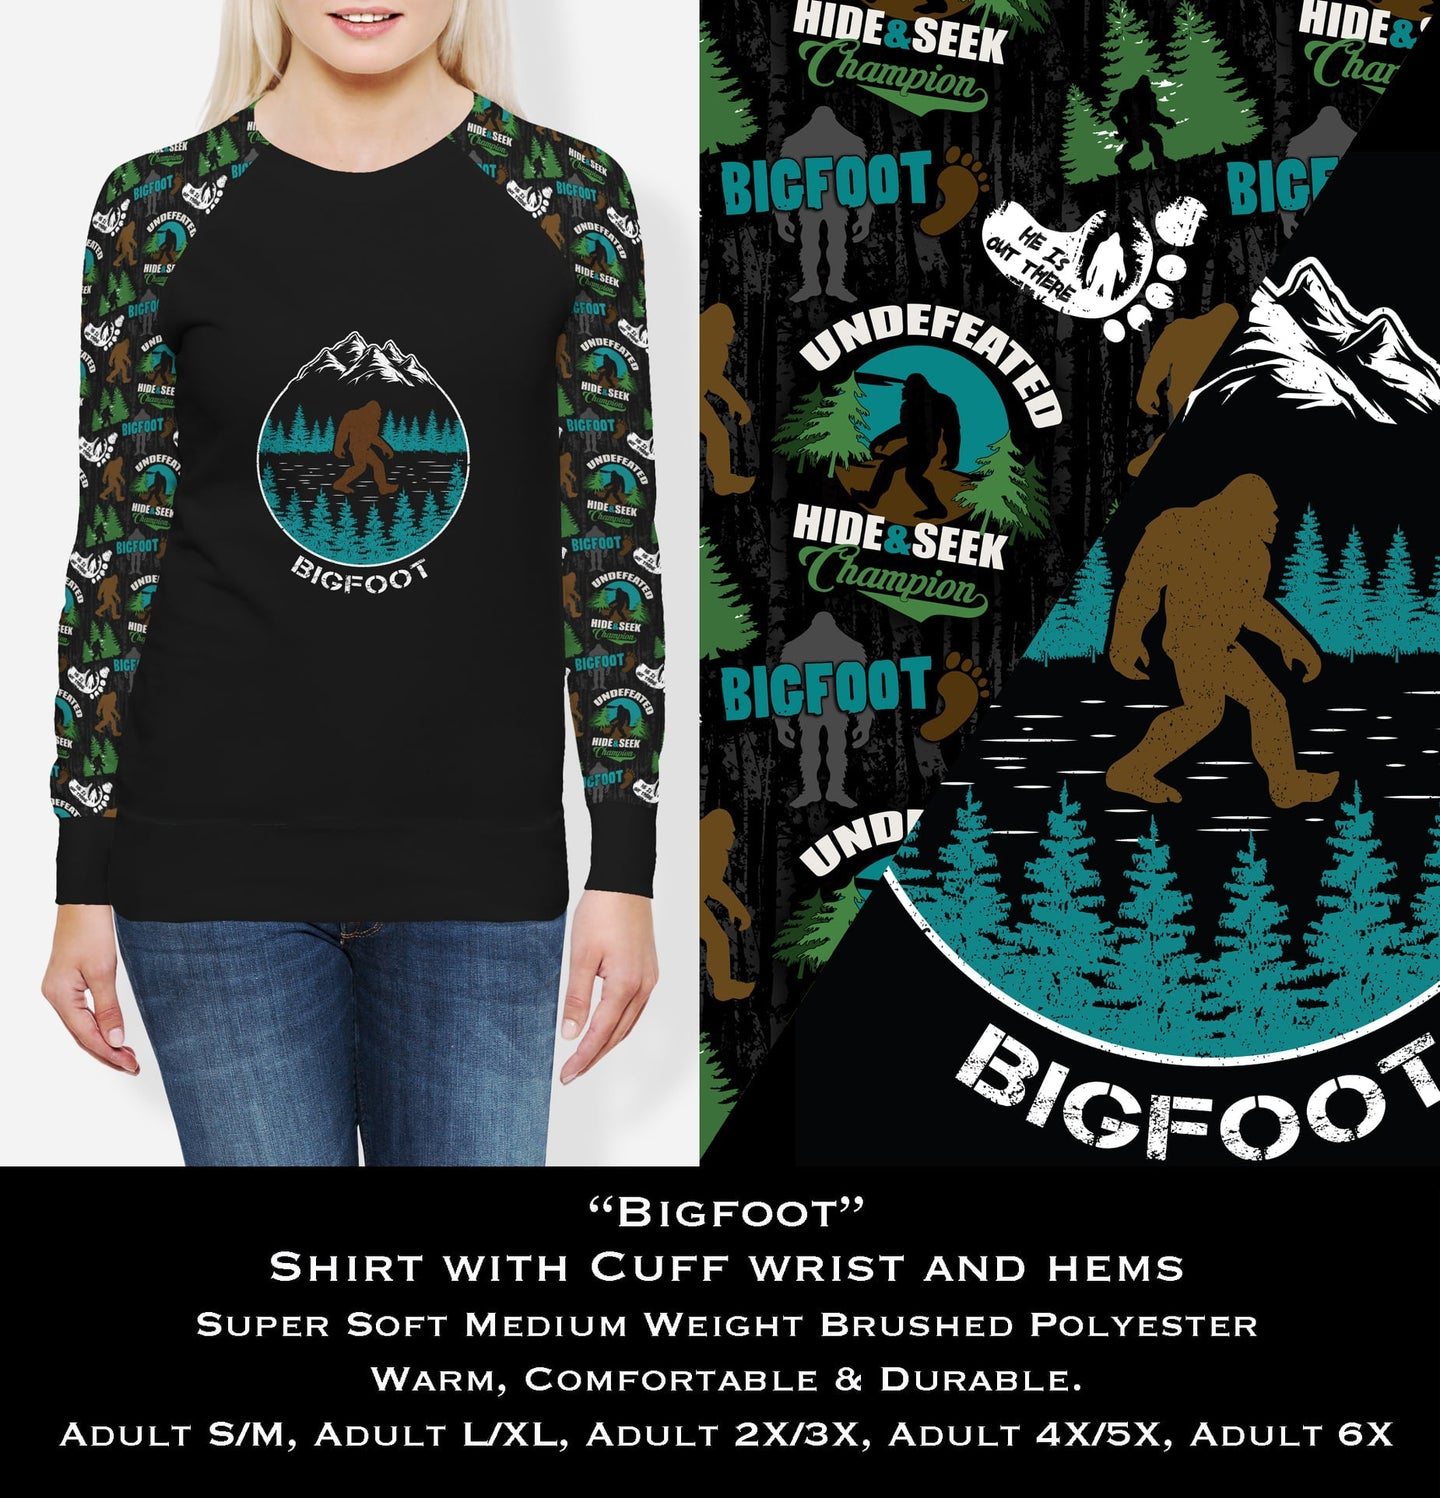 B105 - Bigfoot Cozy Comfort Sweatshirt - Preorder Closes 10/31